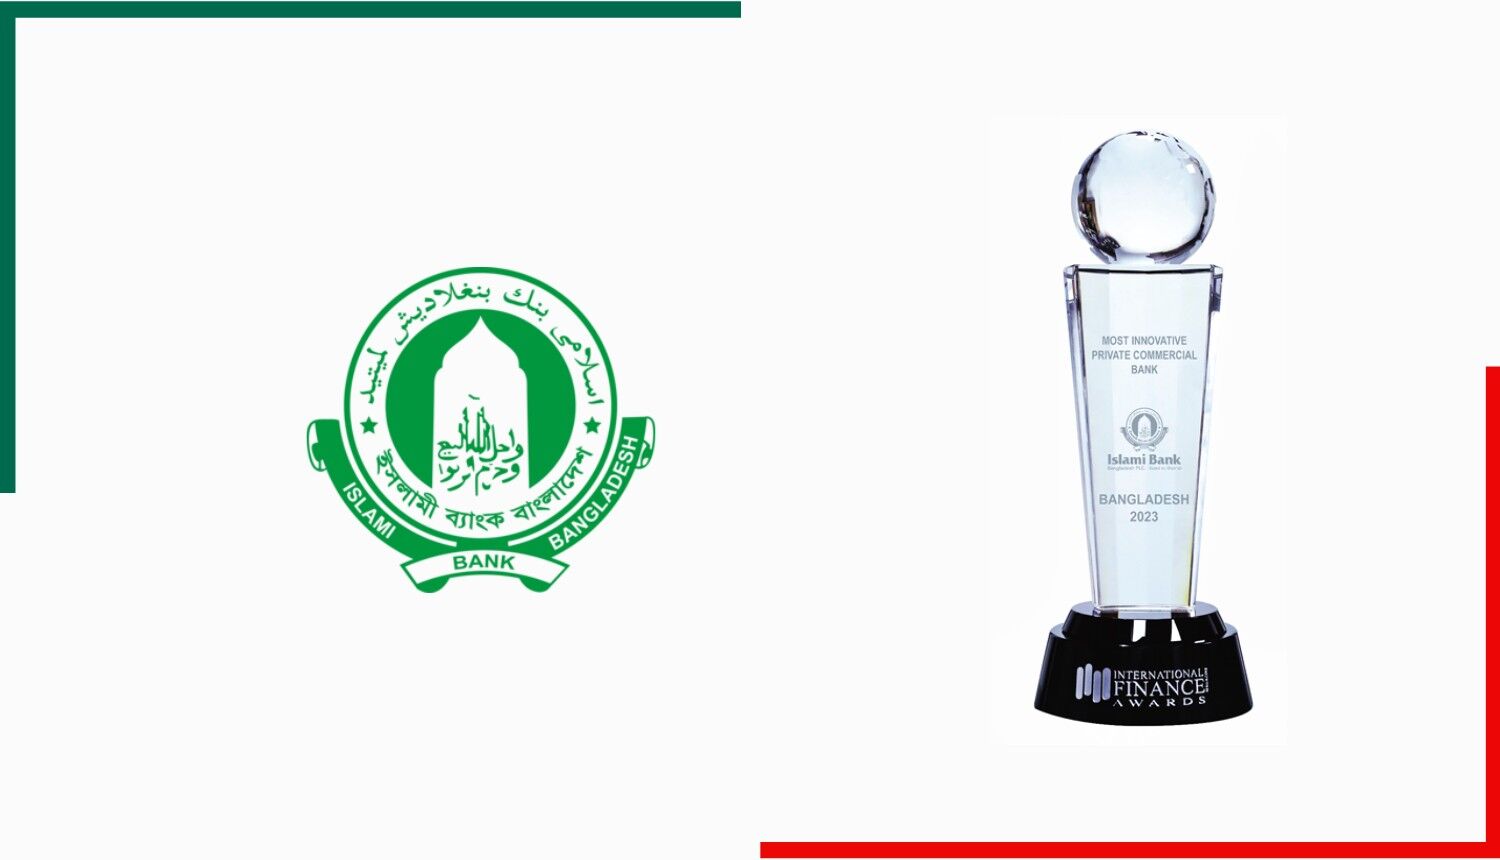 Islami Bank Secures International Finance Award